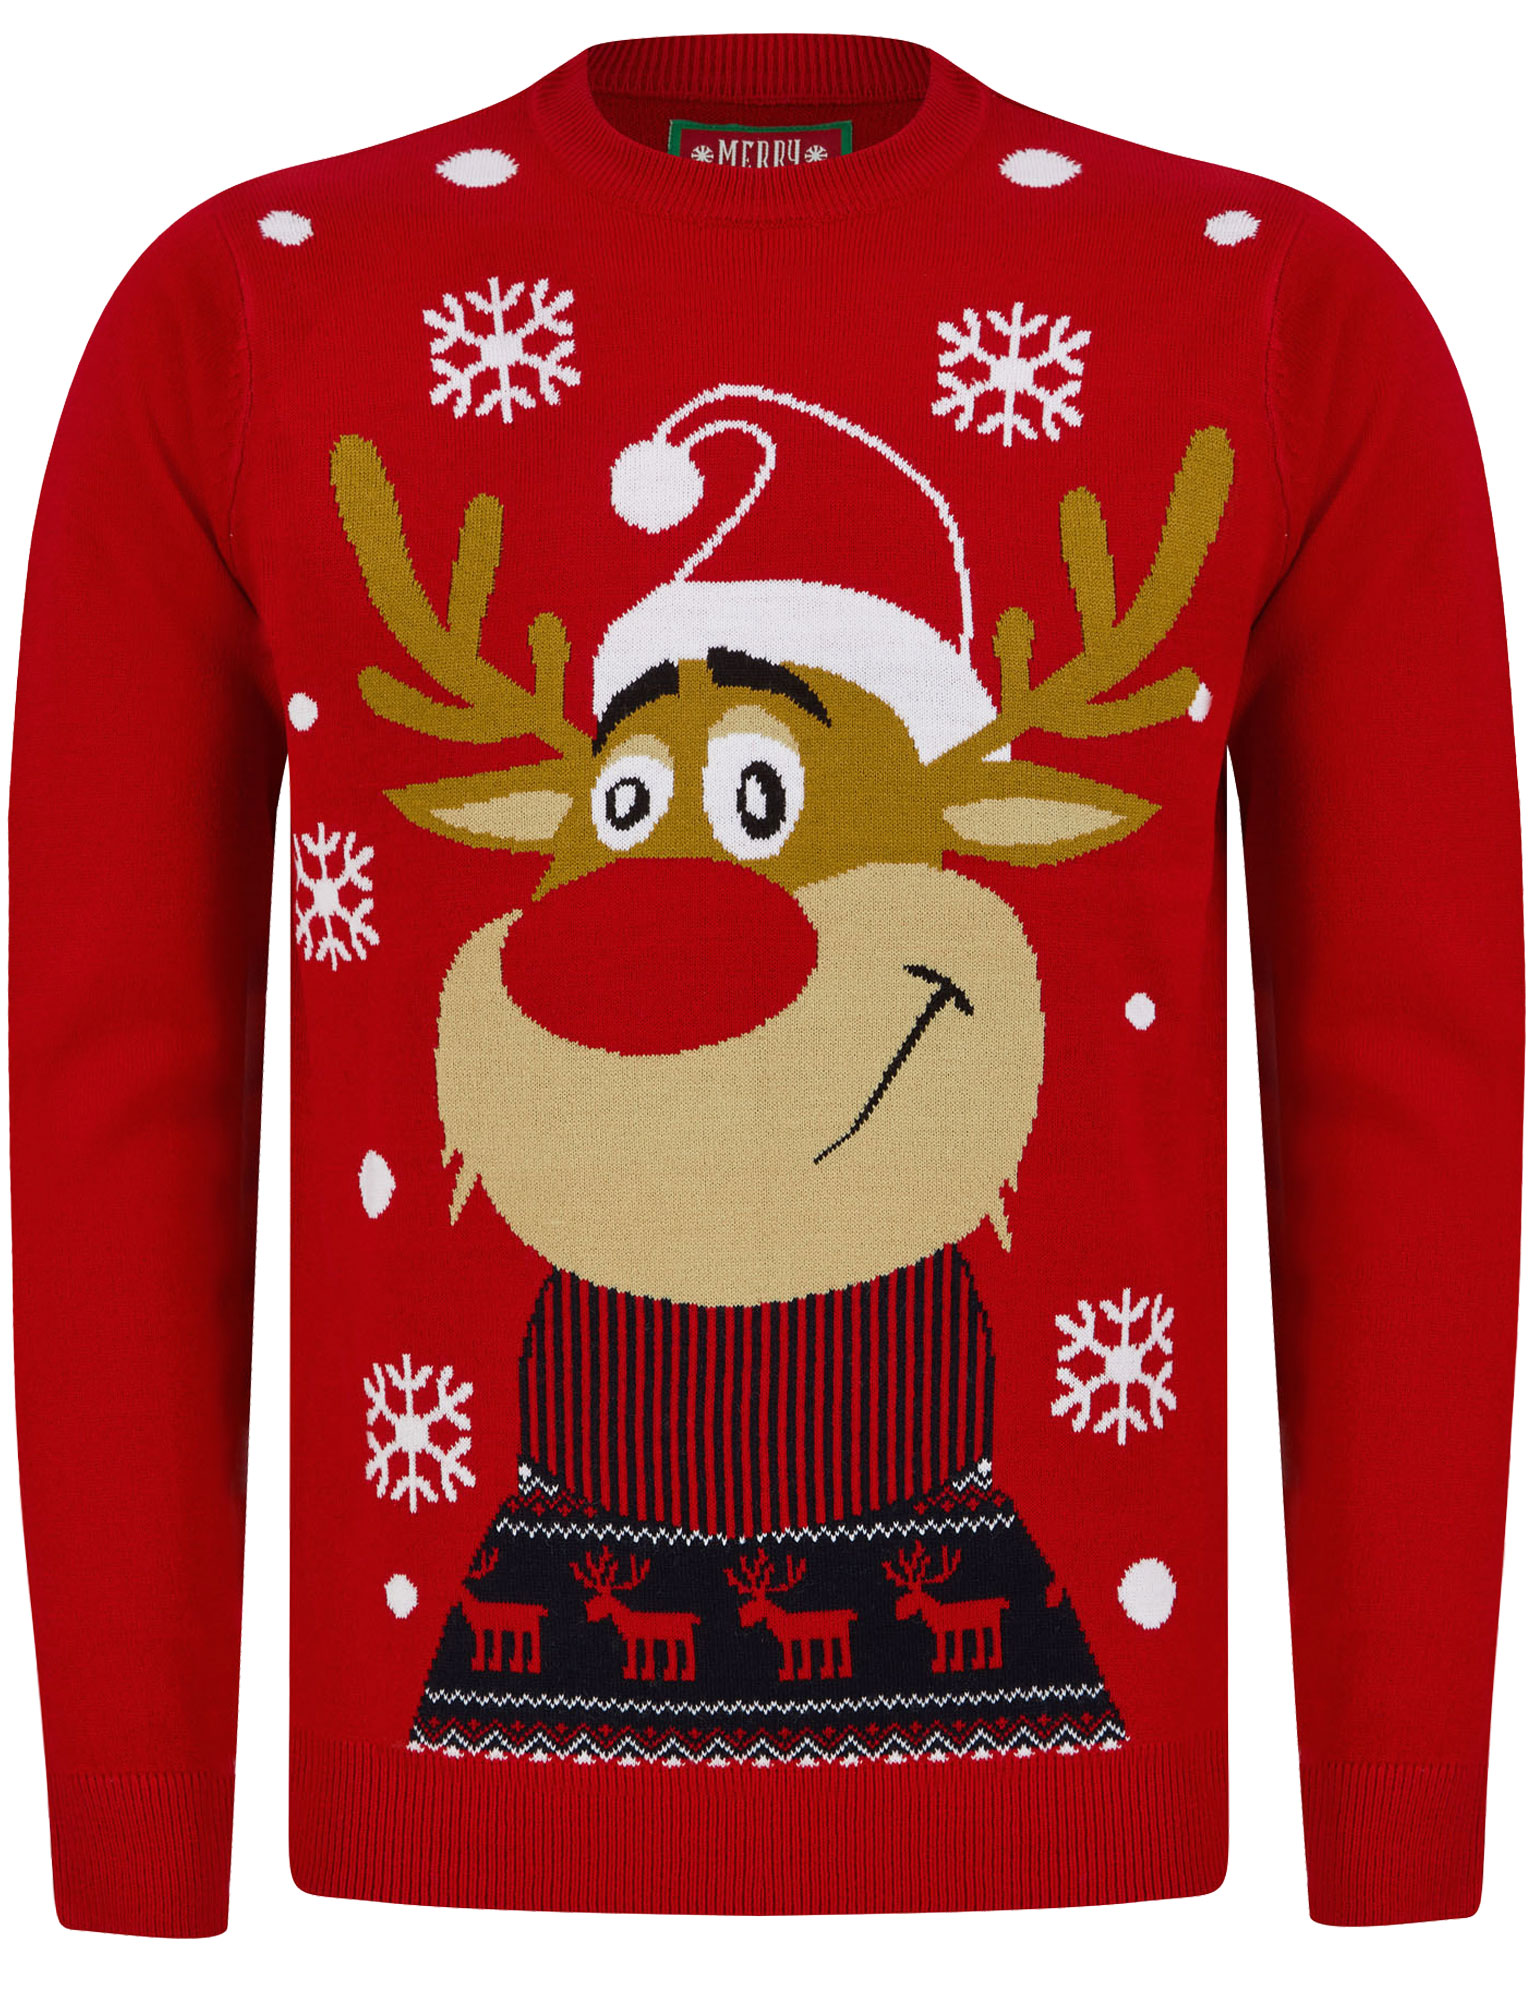 Mens Christmas Jumper Funny Novelty Xmas Pullover Sweater Knitted Santa